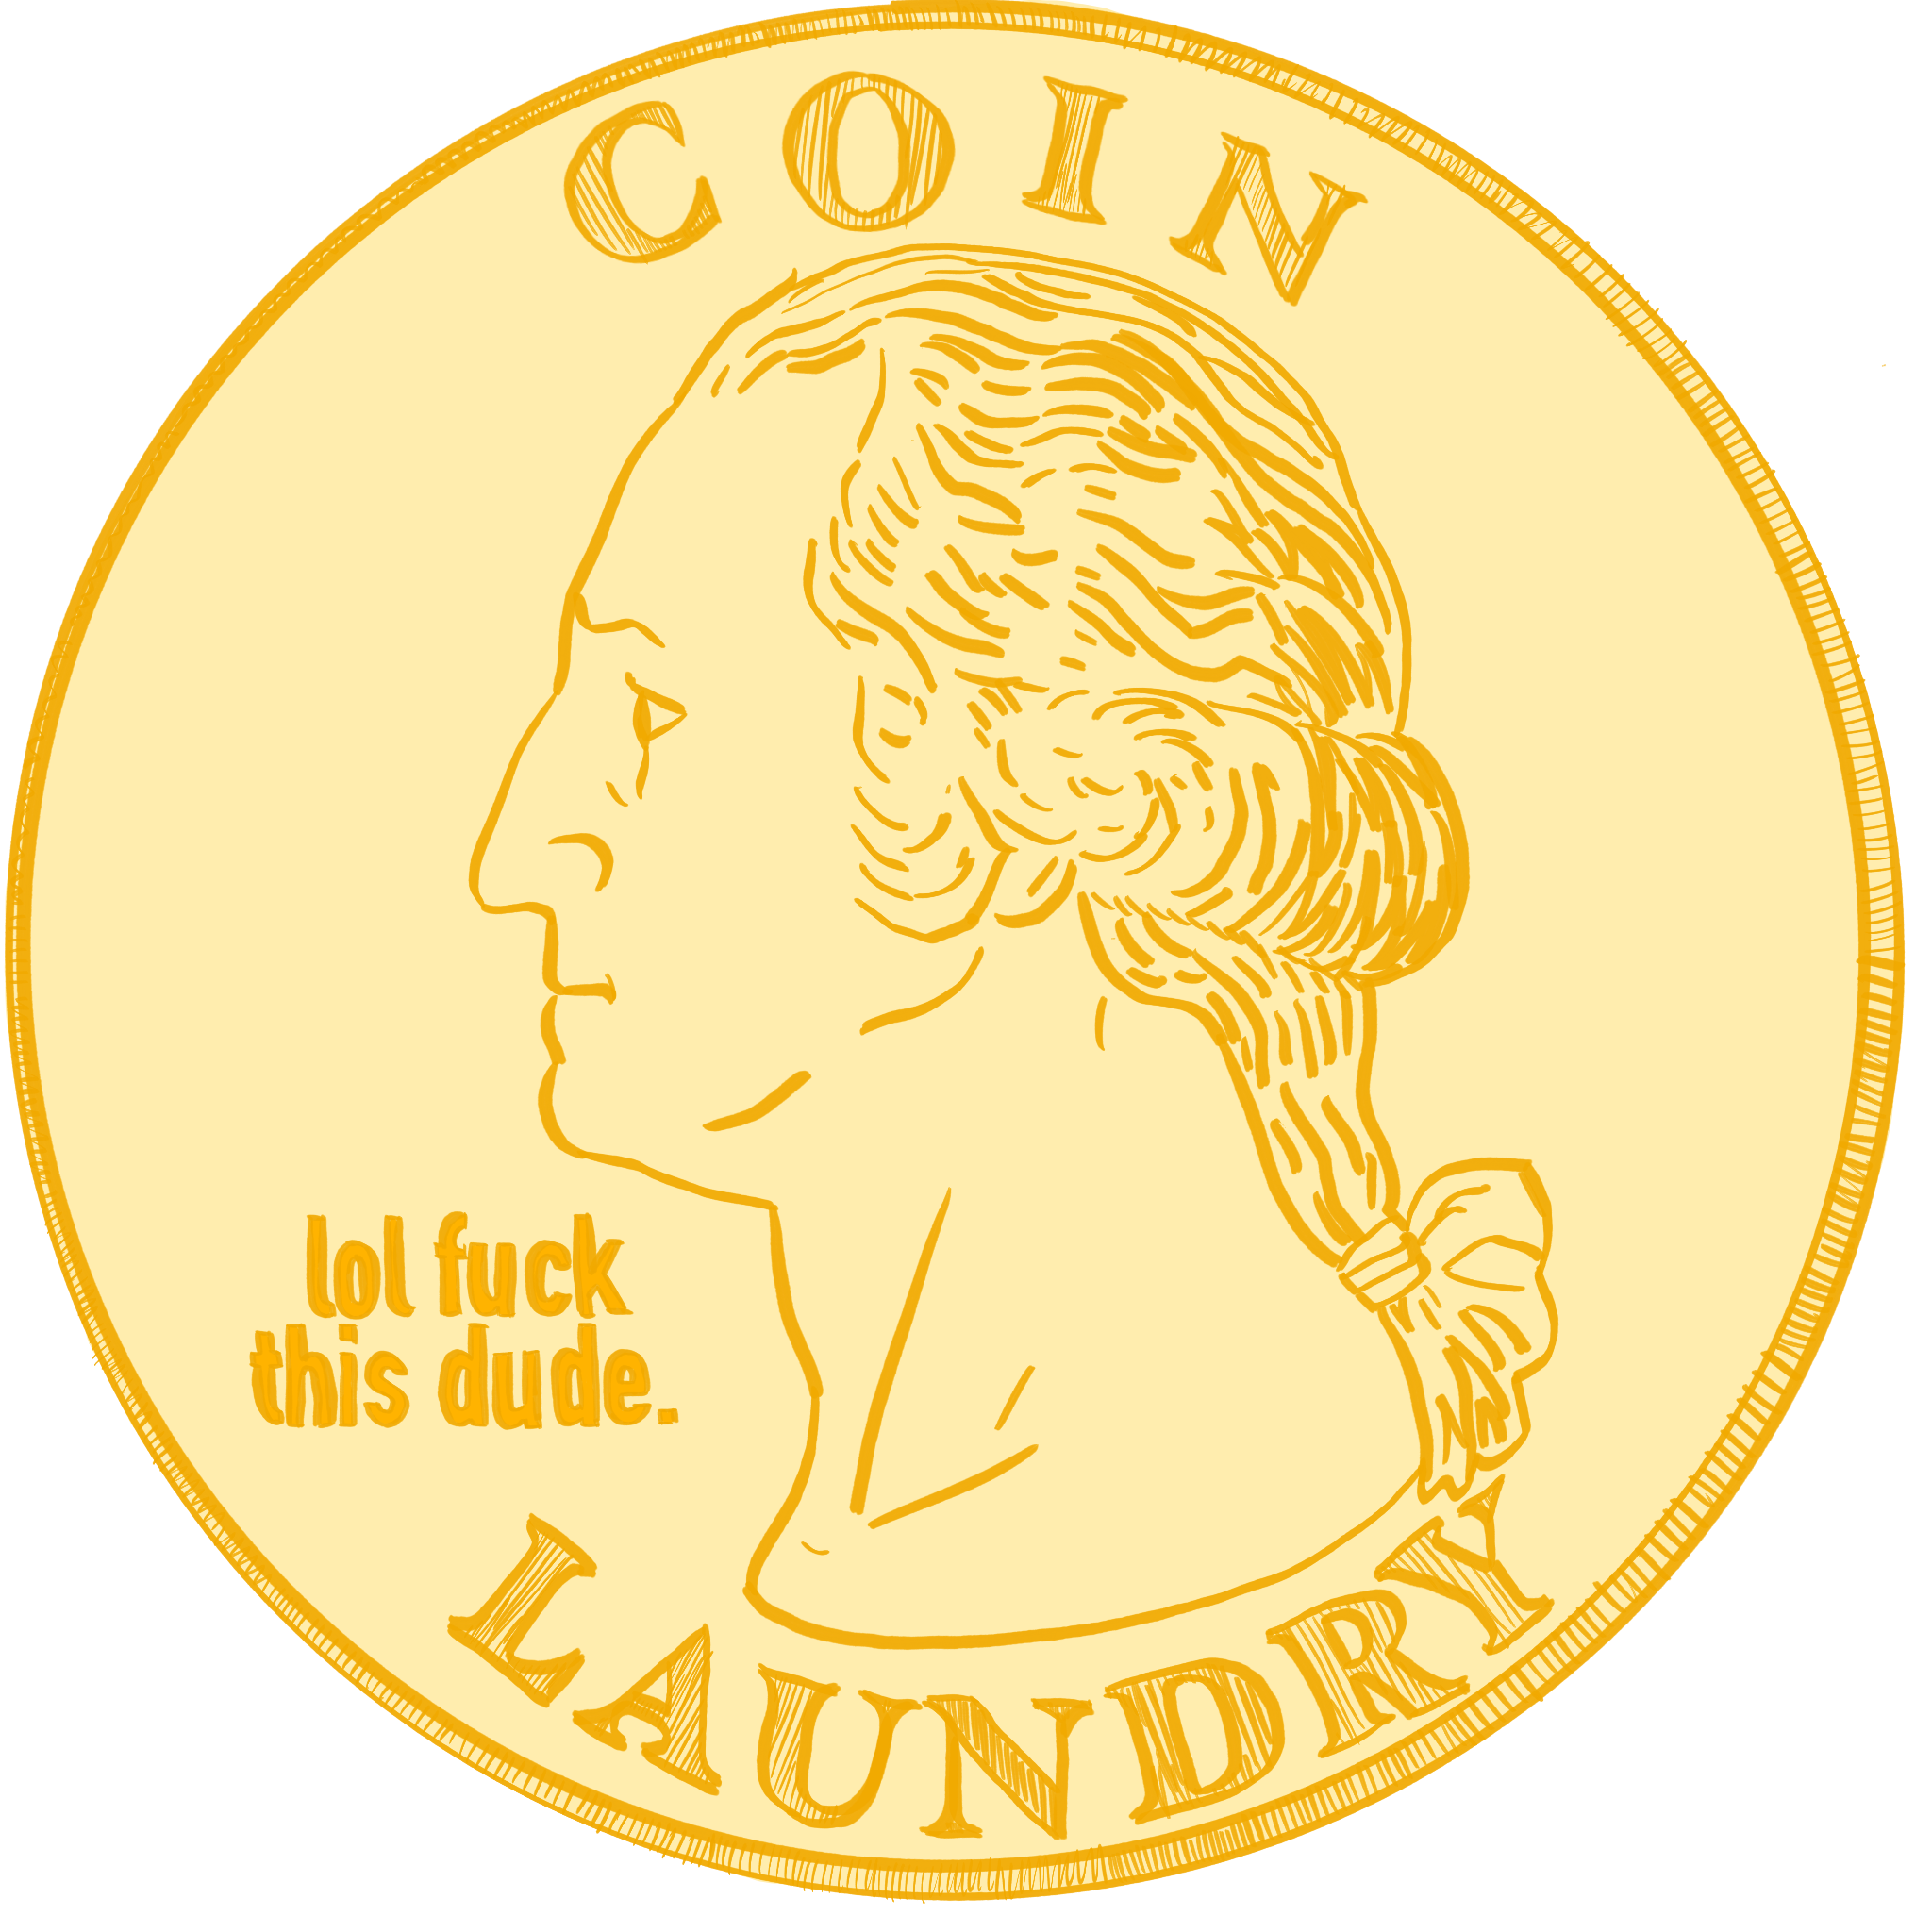 Coin Laundry Comics